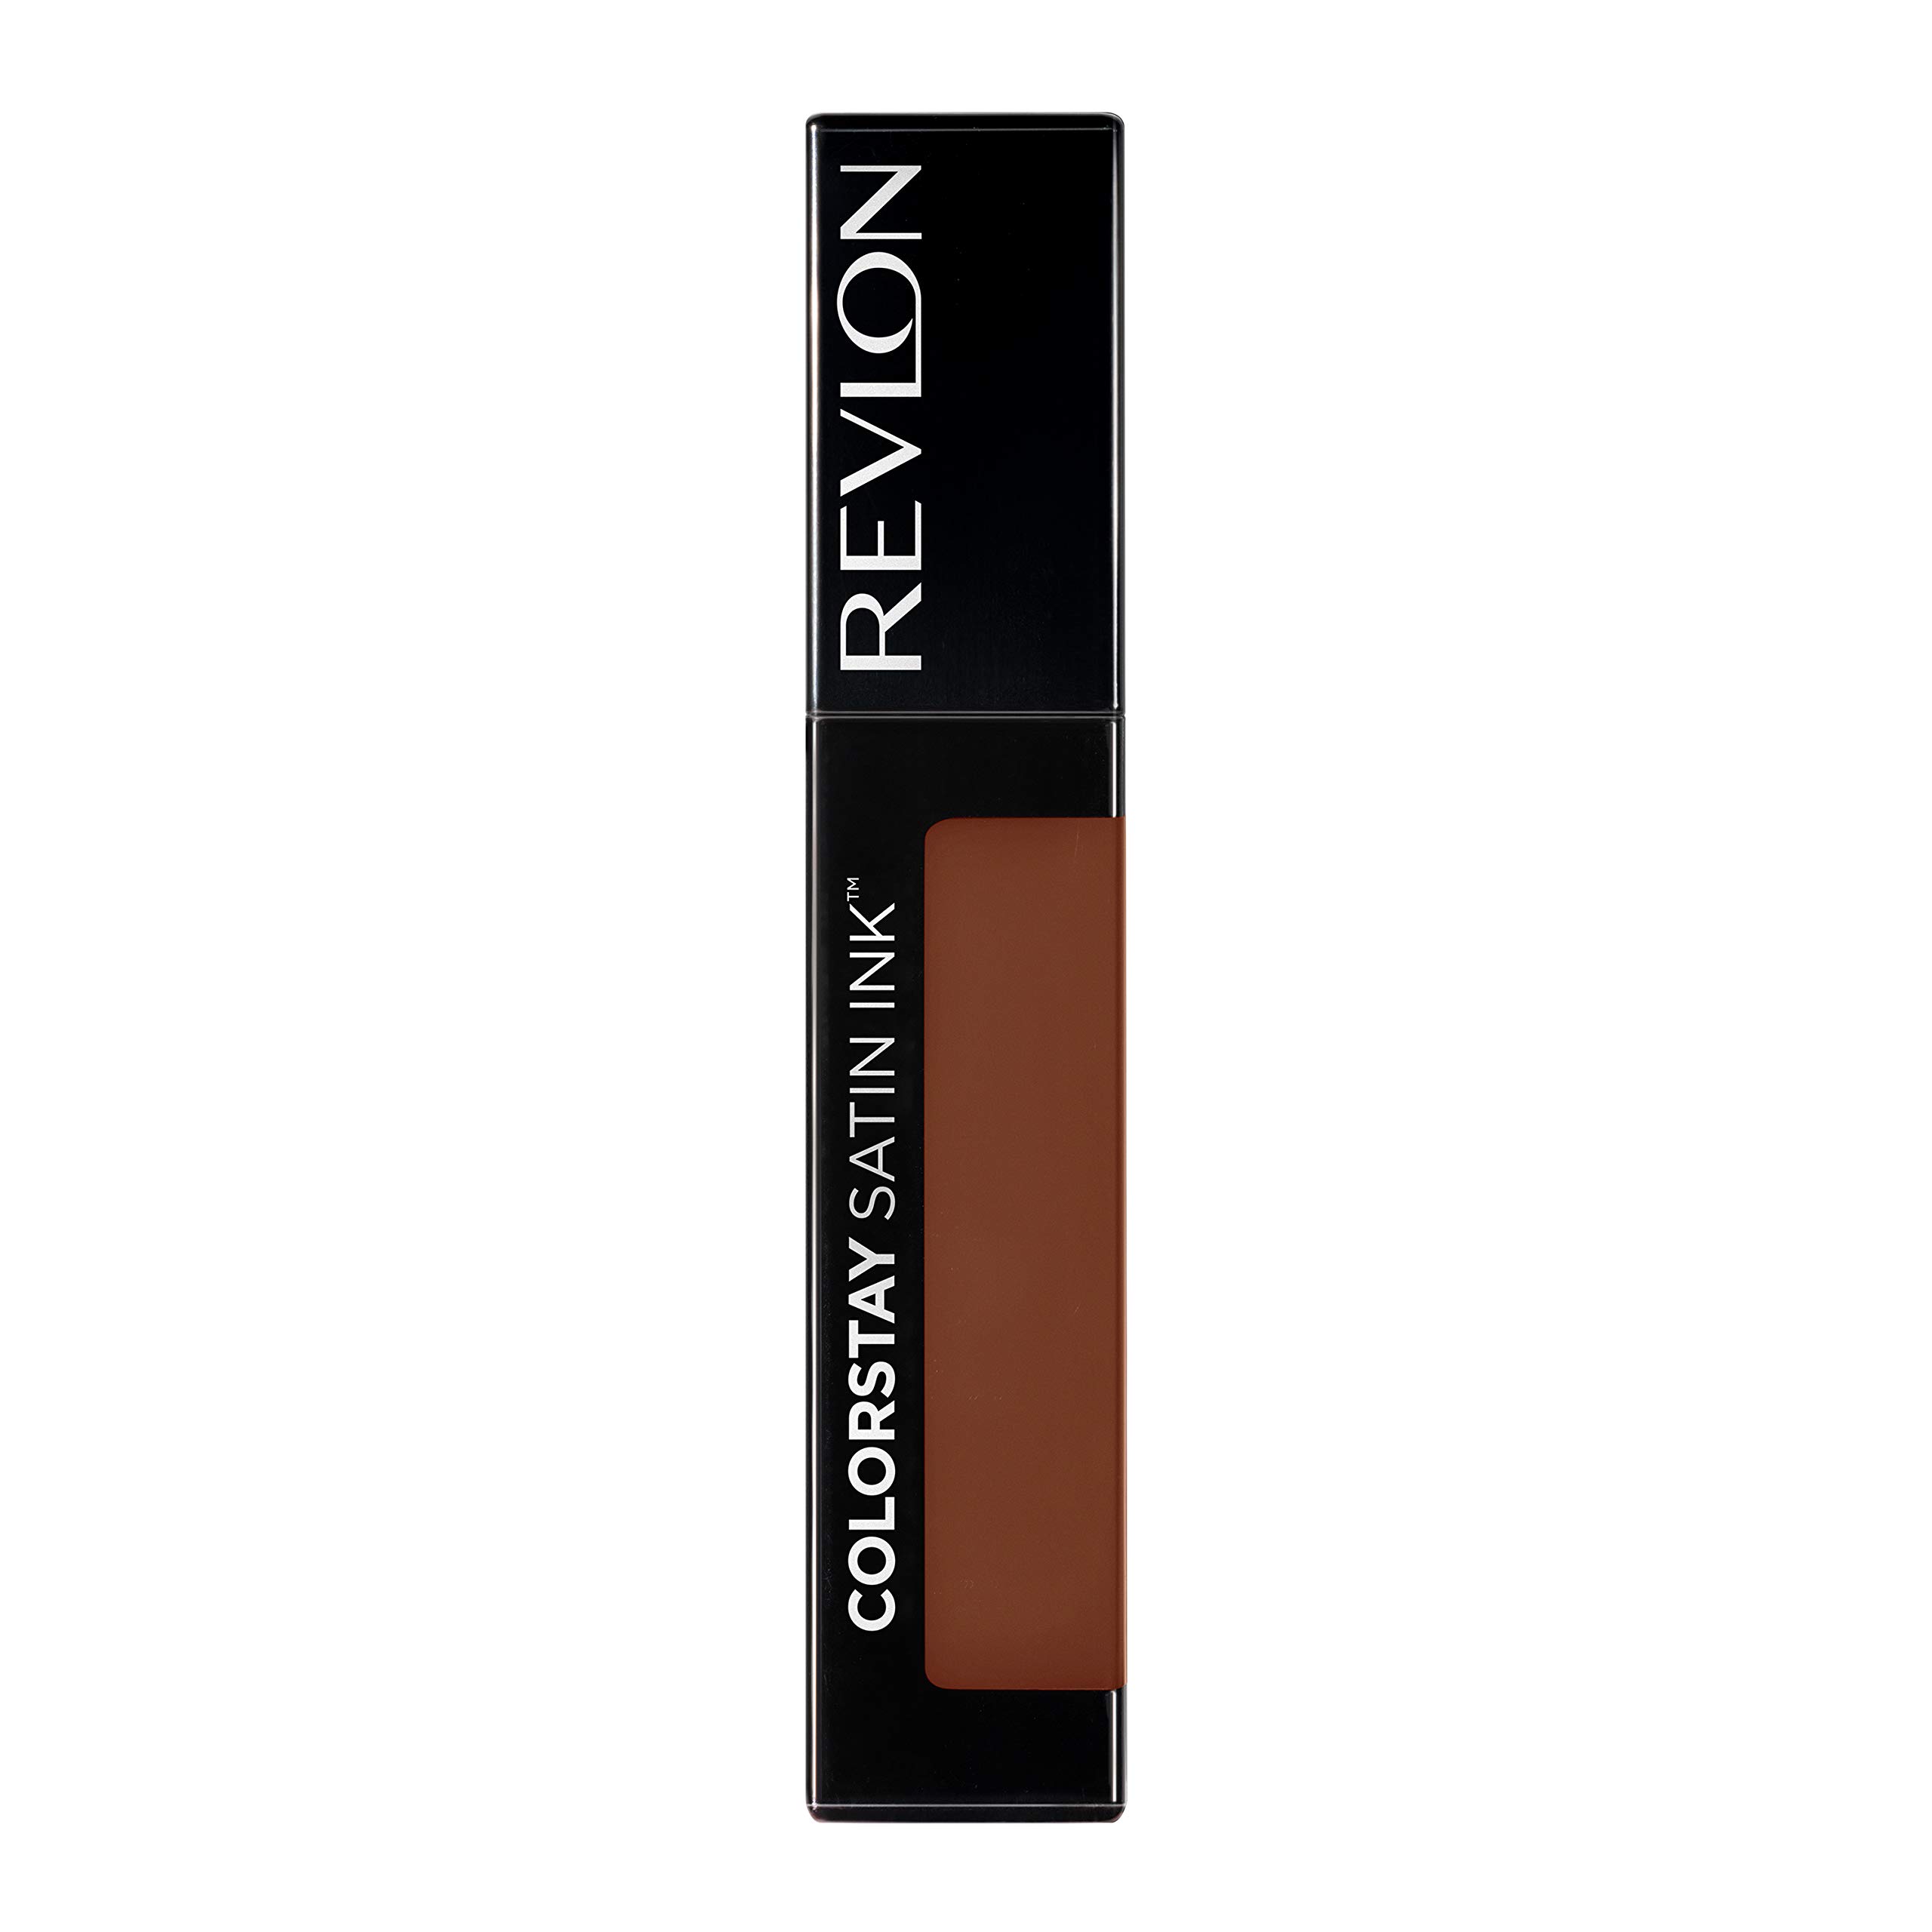 Revlon ColorStay Satin Ink Longwear Liquid Lipstick (In So Deep) $2.15 w/ S&S + Free Shipping w/ Prime or on $25+